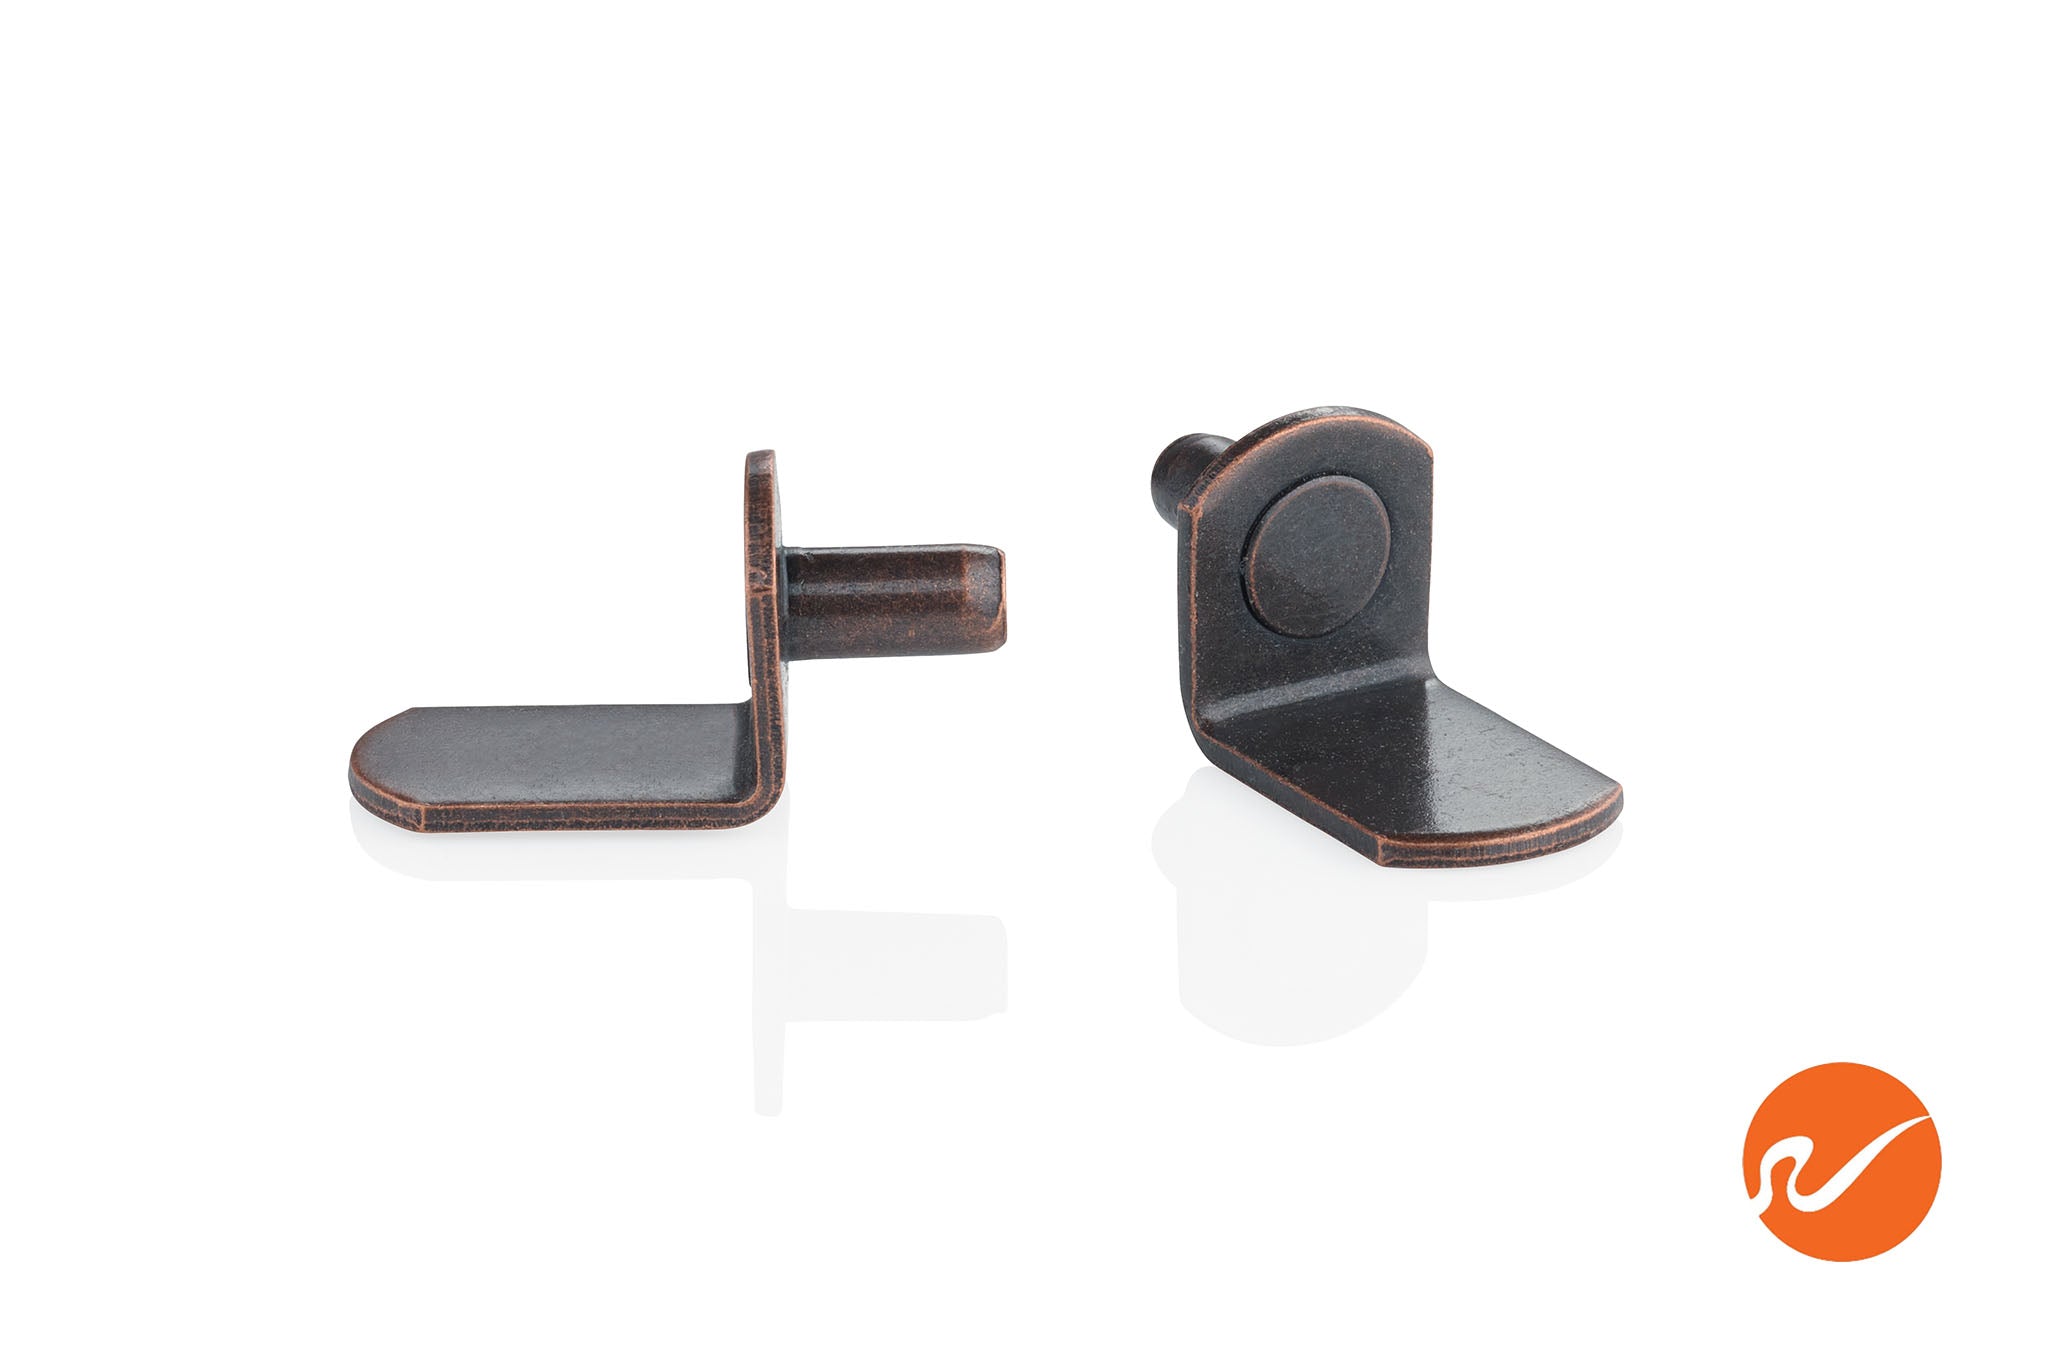 5mm Antique Bronze "L" Shelf Pins - WidgetCo